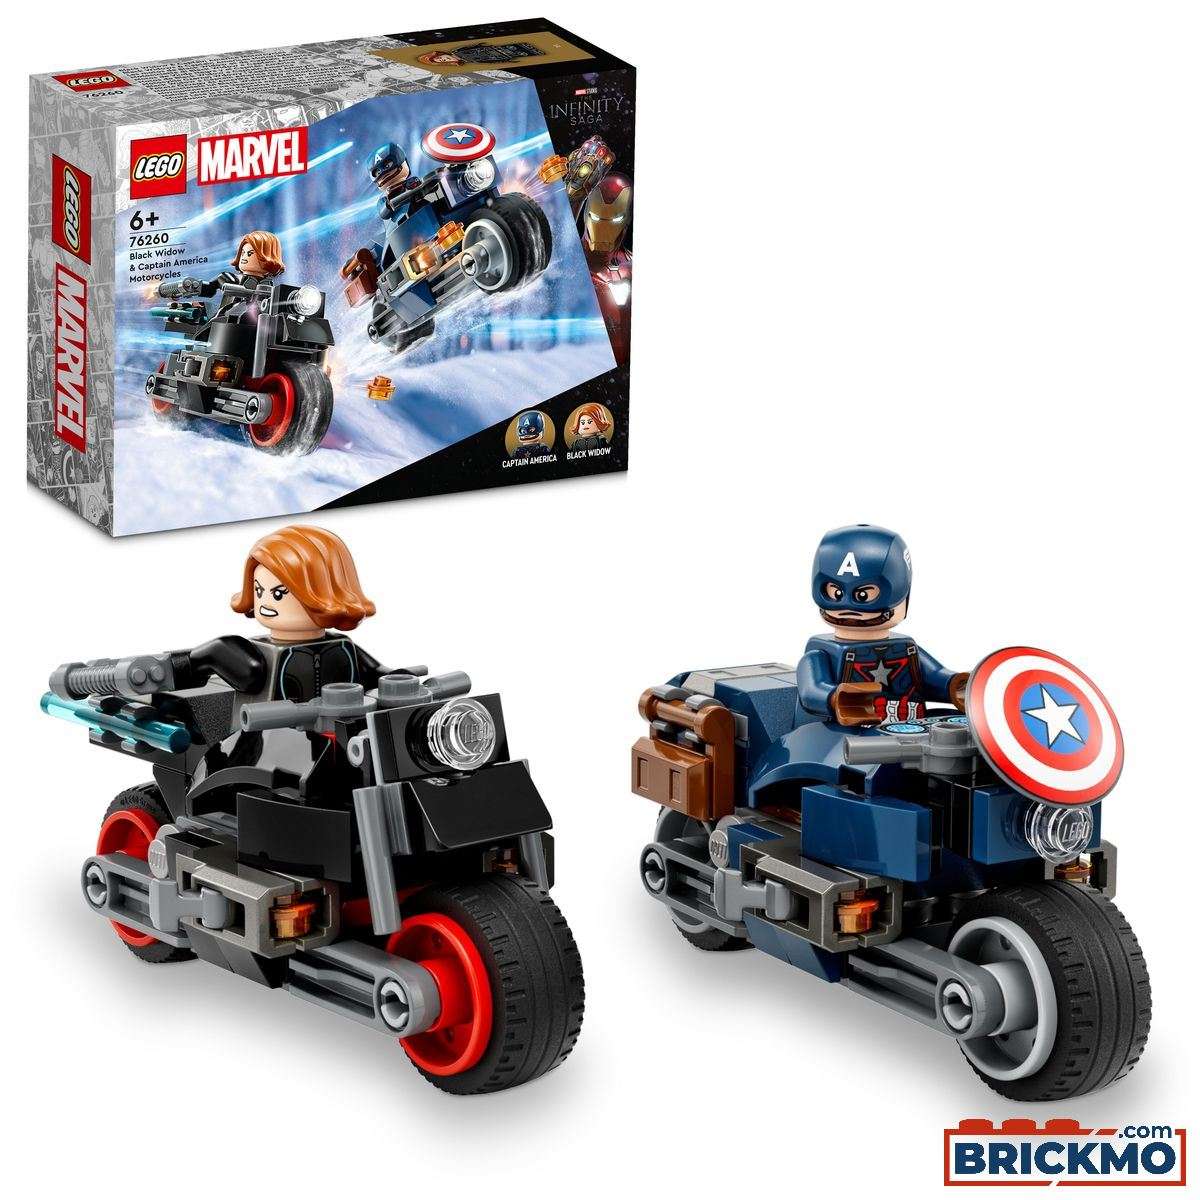 LEGO Marvel 76260 Motociclette di Black Widow e Captain America 76260